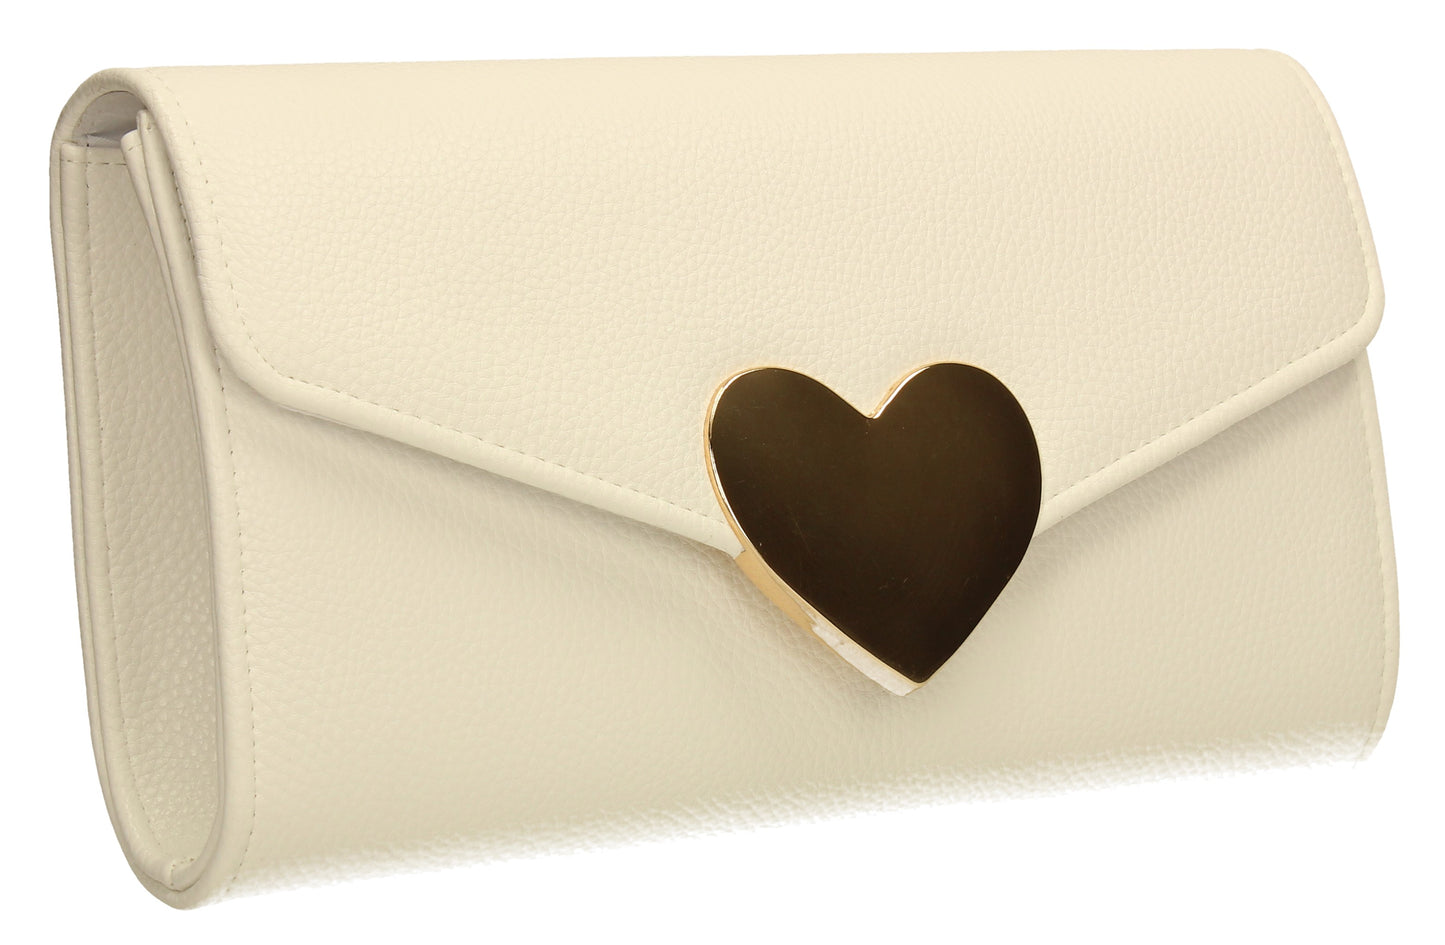 SWANKYSWANS Corrie Heart Clutch Bag White Cute Cheap Clutch Bag For Weddings School and Work